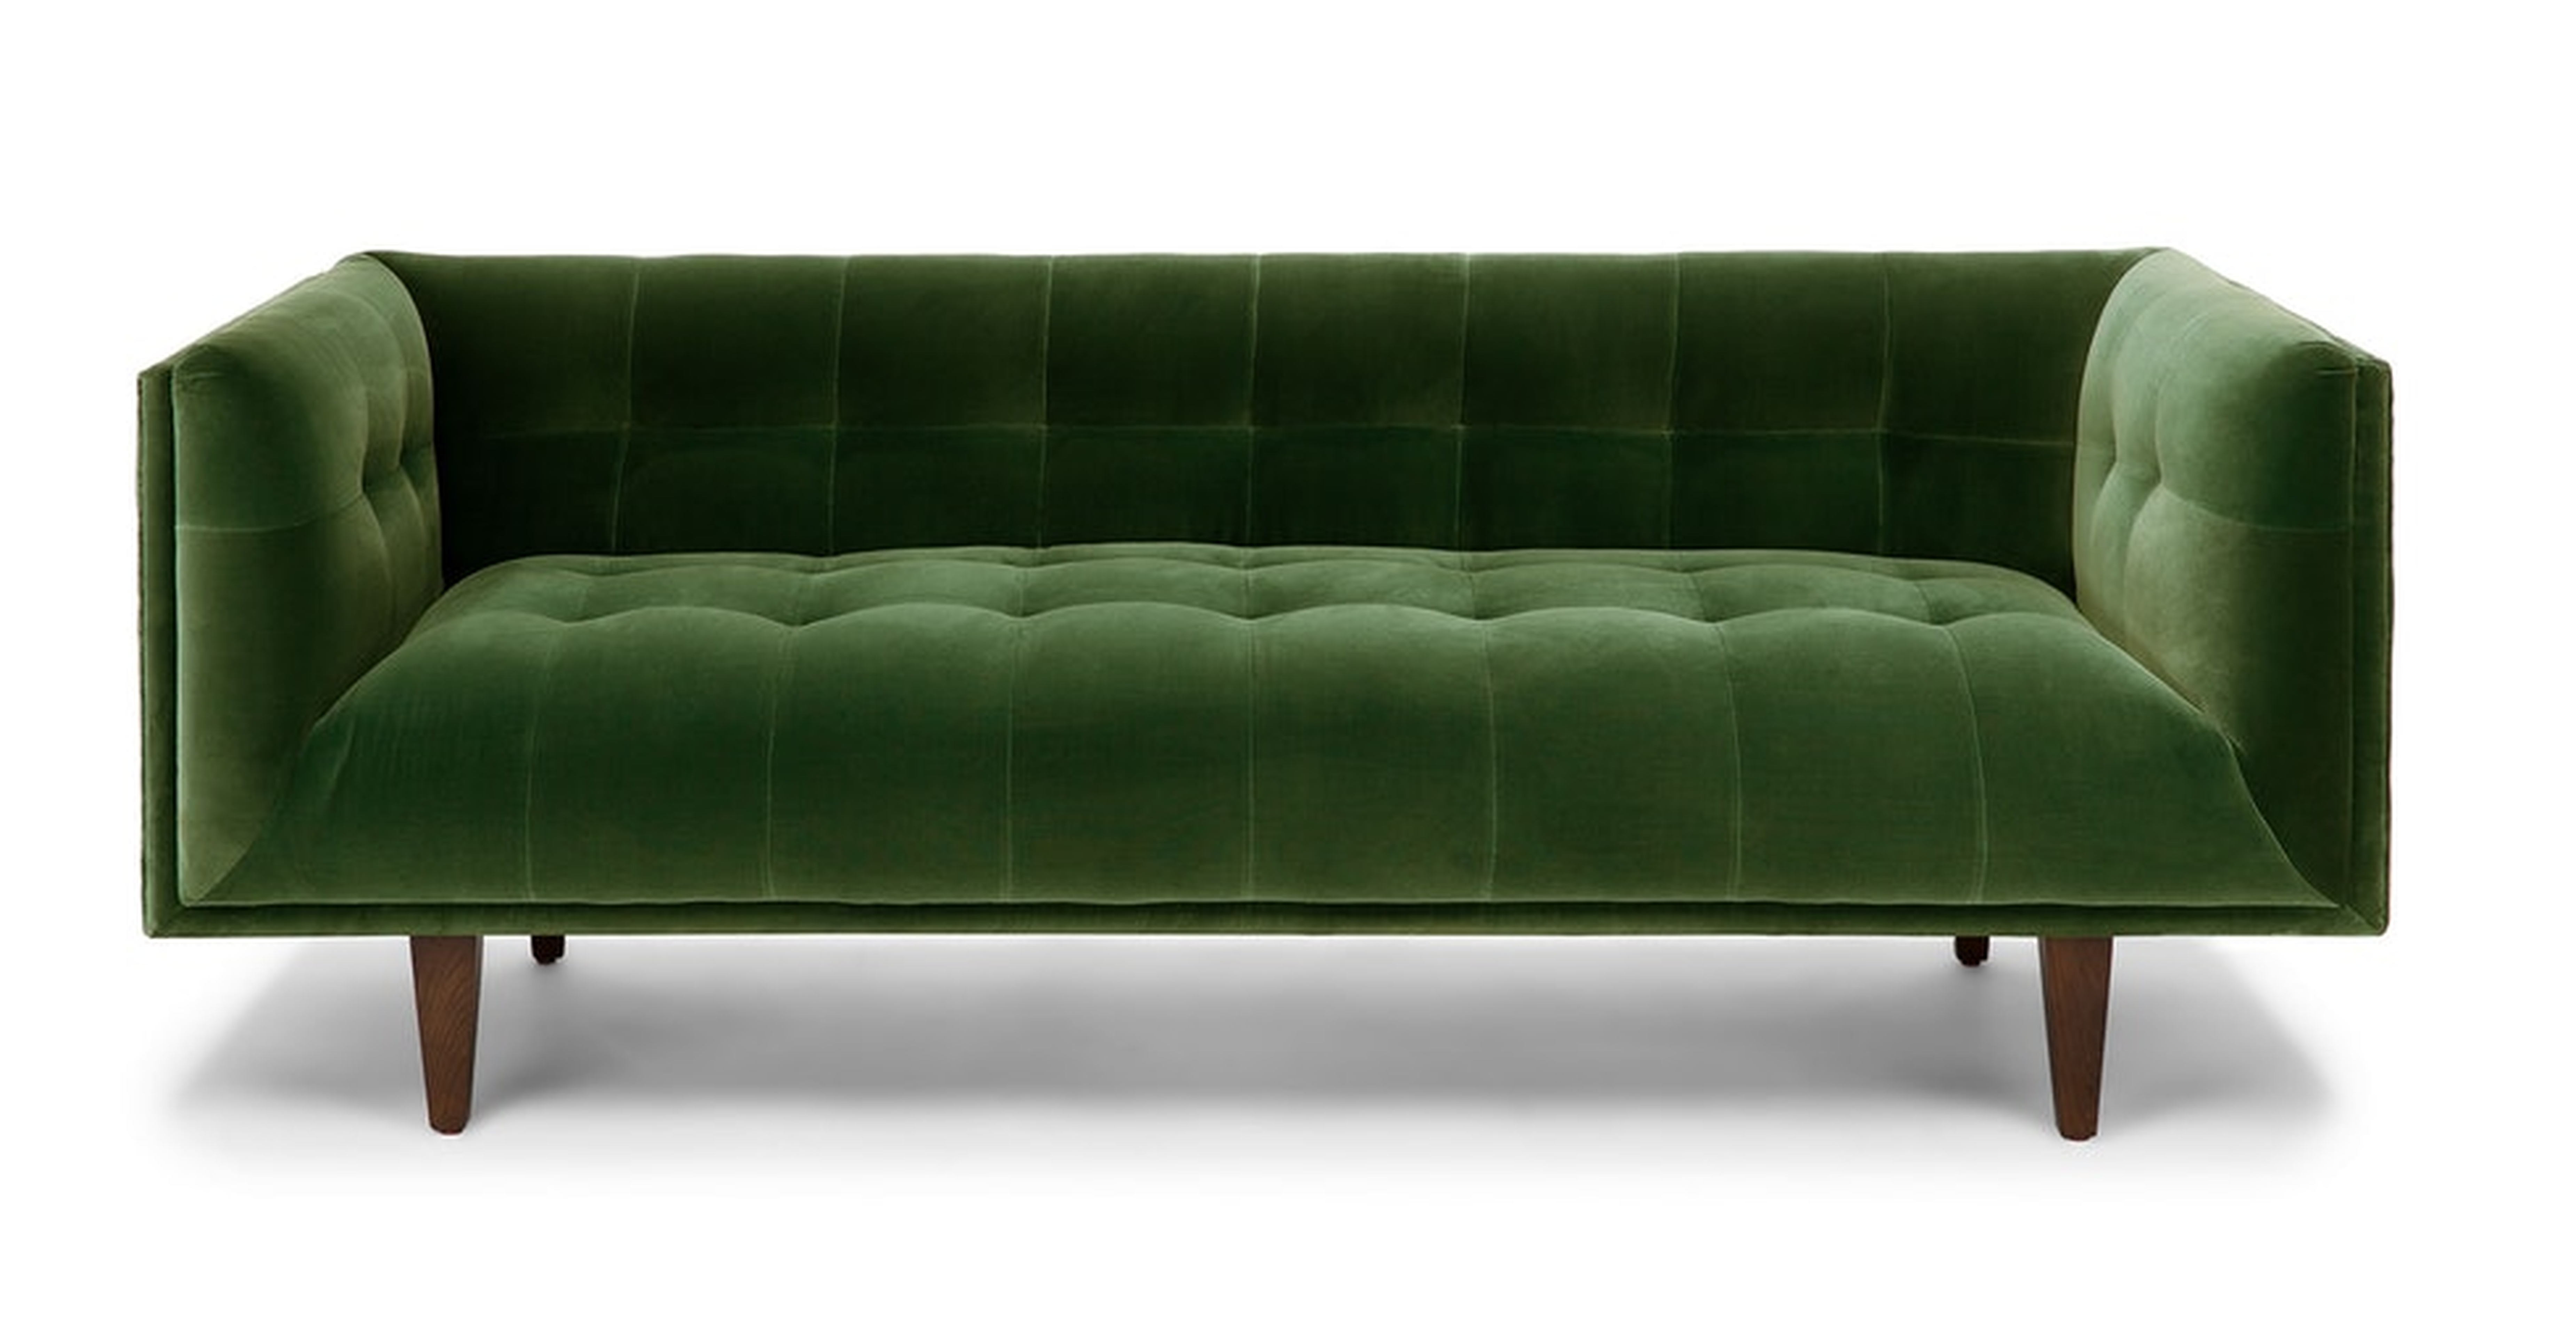 Cirrus Grass Green Sofa - Article